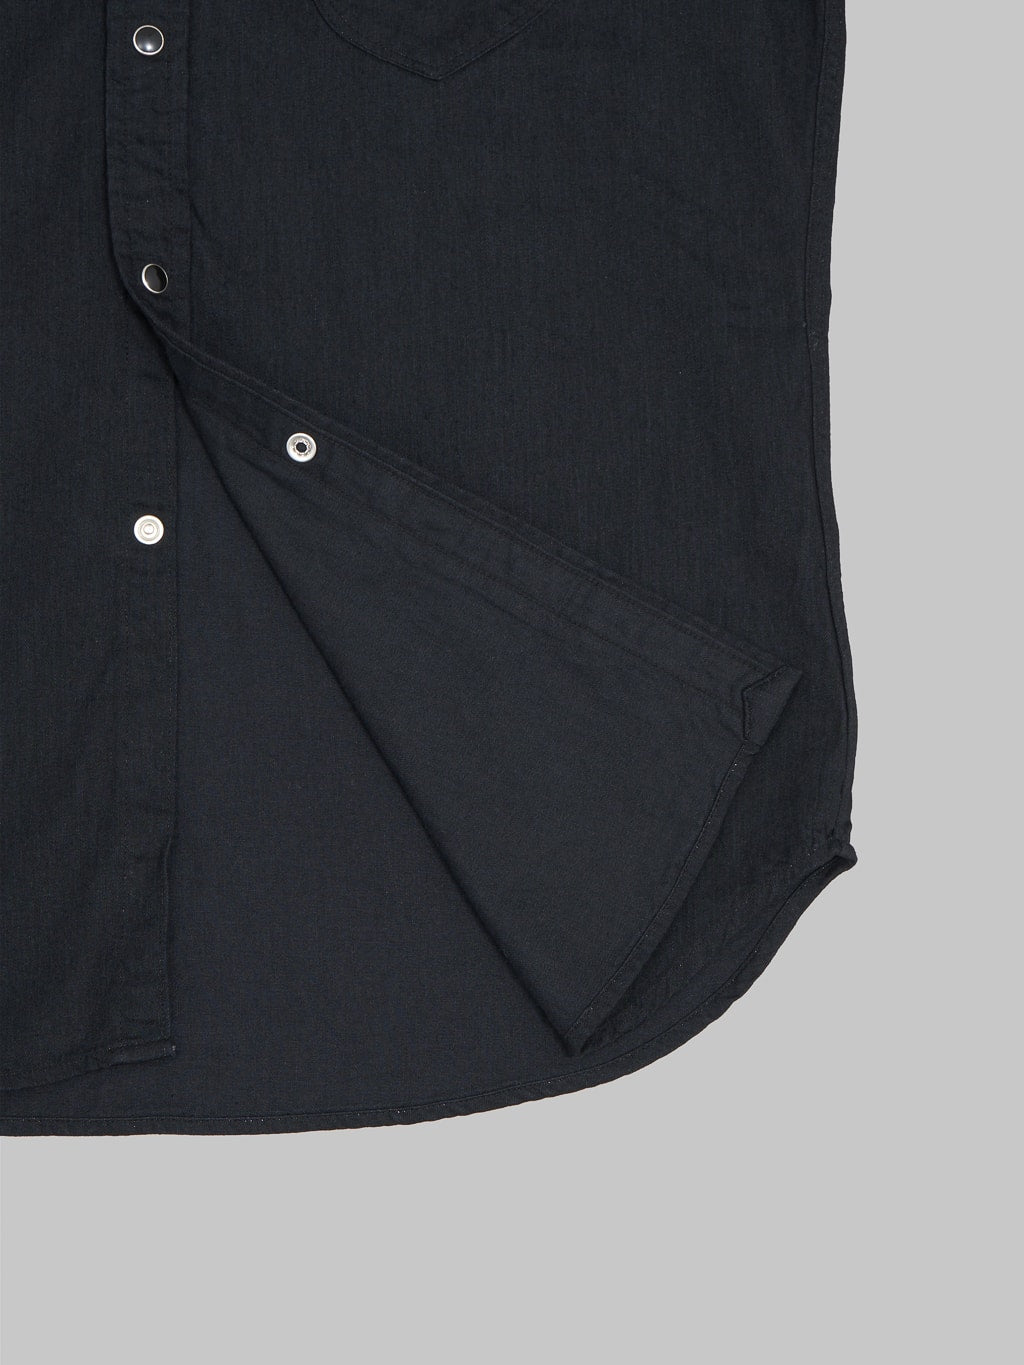 Stevenson Overall Cody Shirt black denim interior texture